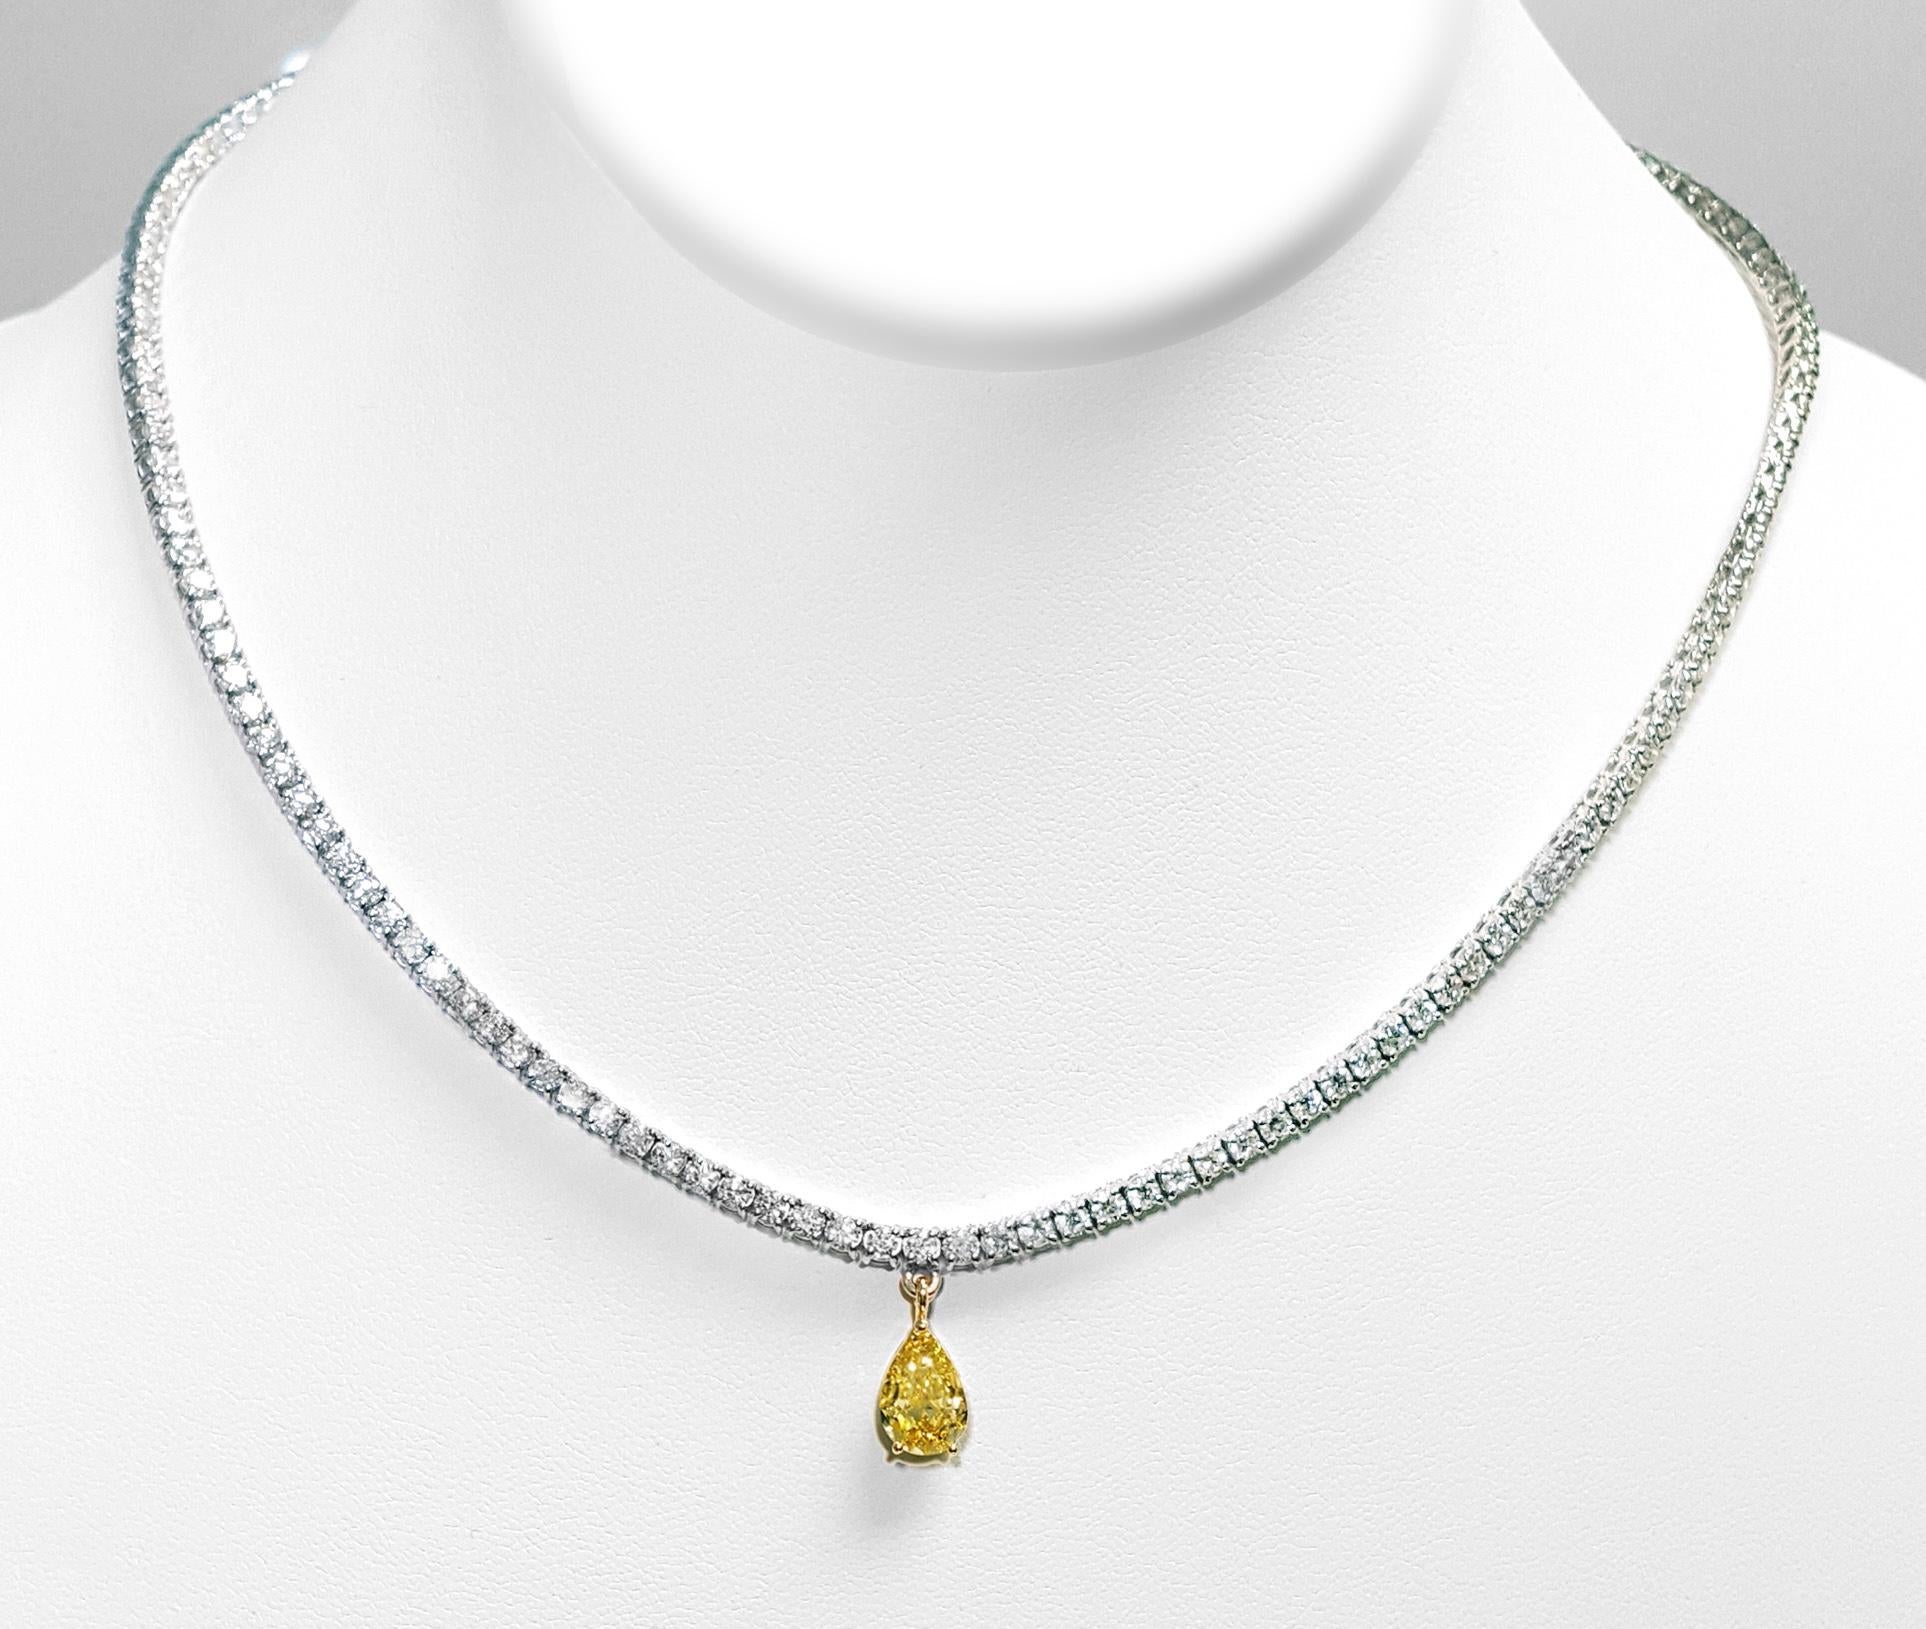 Pear Cut 10.66 Carat Fancy Intense Yellow Pendant  & Diamond Tennis Necklace In 18k Gold. For Sale